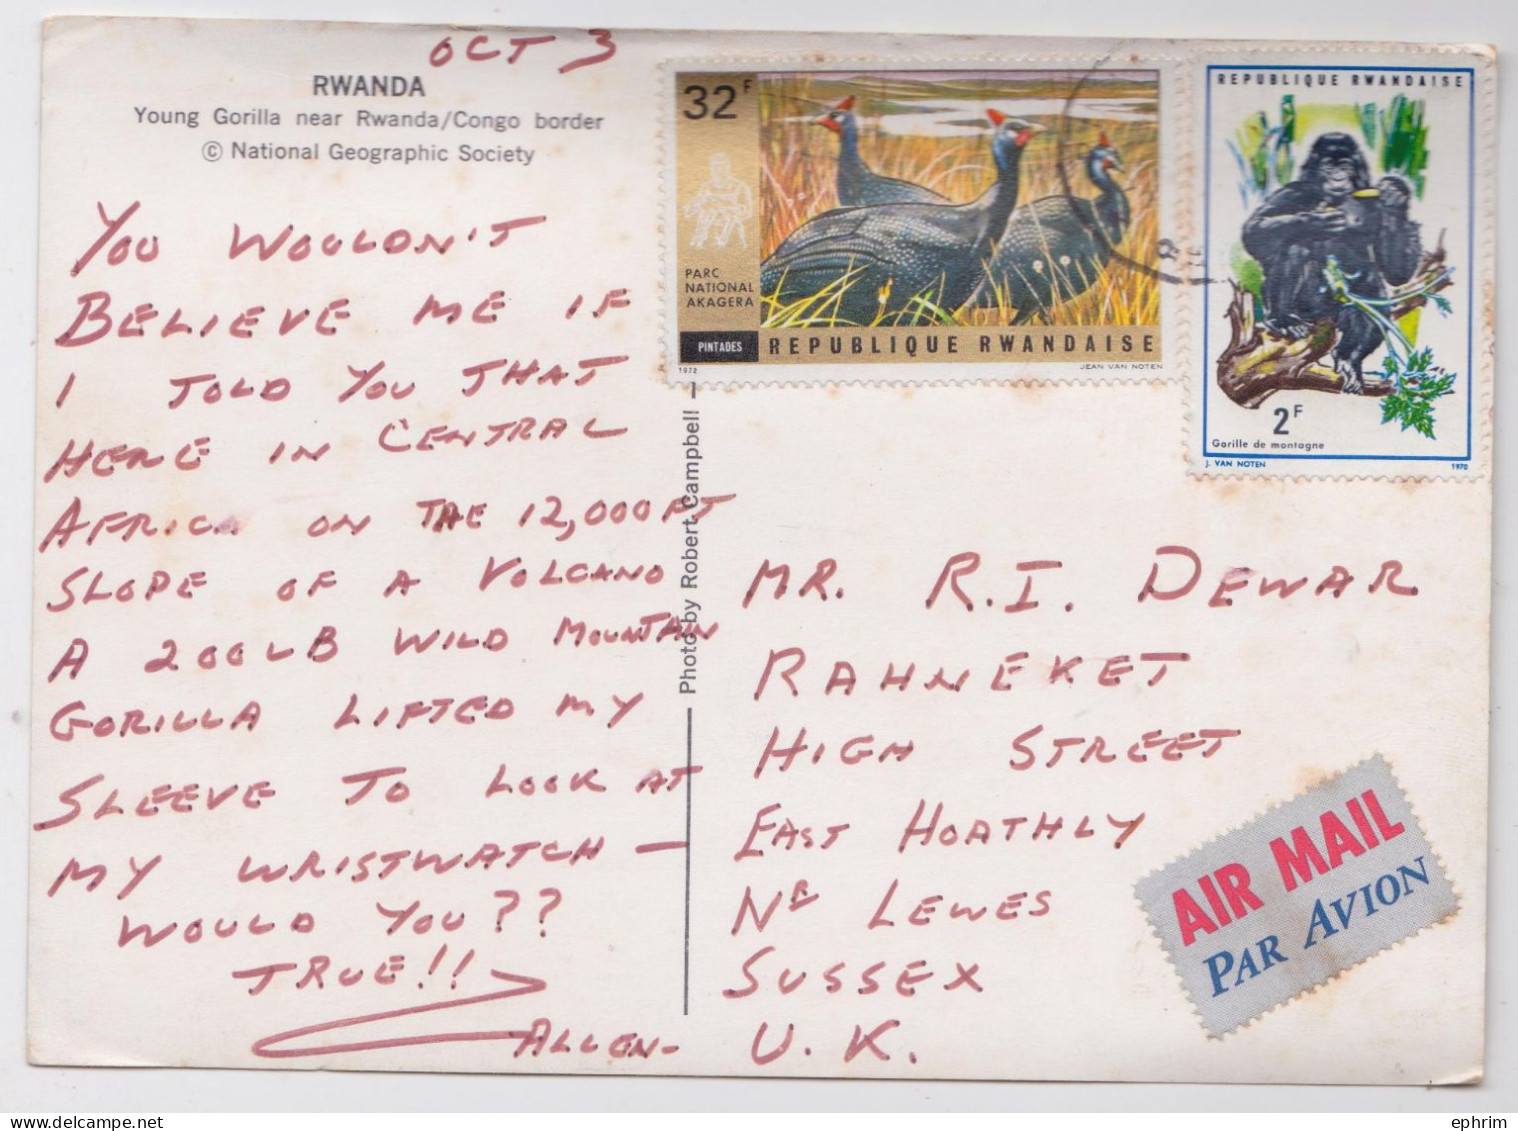 Rwanda Ruanda Carte Postale Timbre Parc National Gorille Gorilla Stamp 1970 Air Mail Postcard - Brieven En Documenten